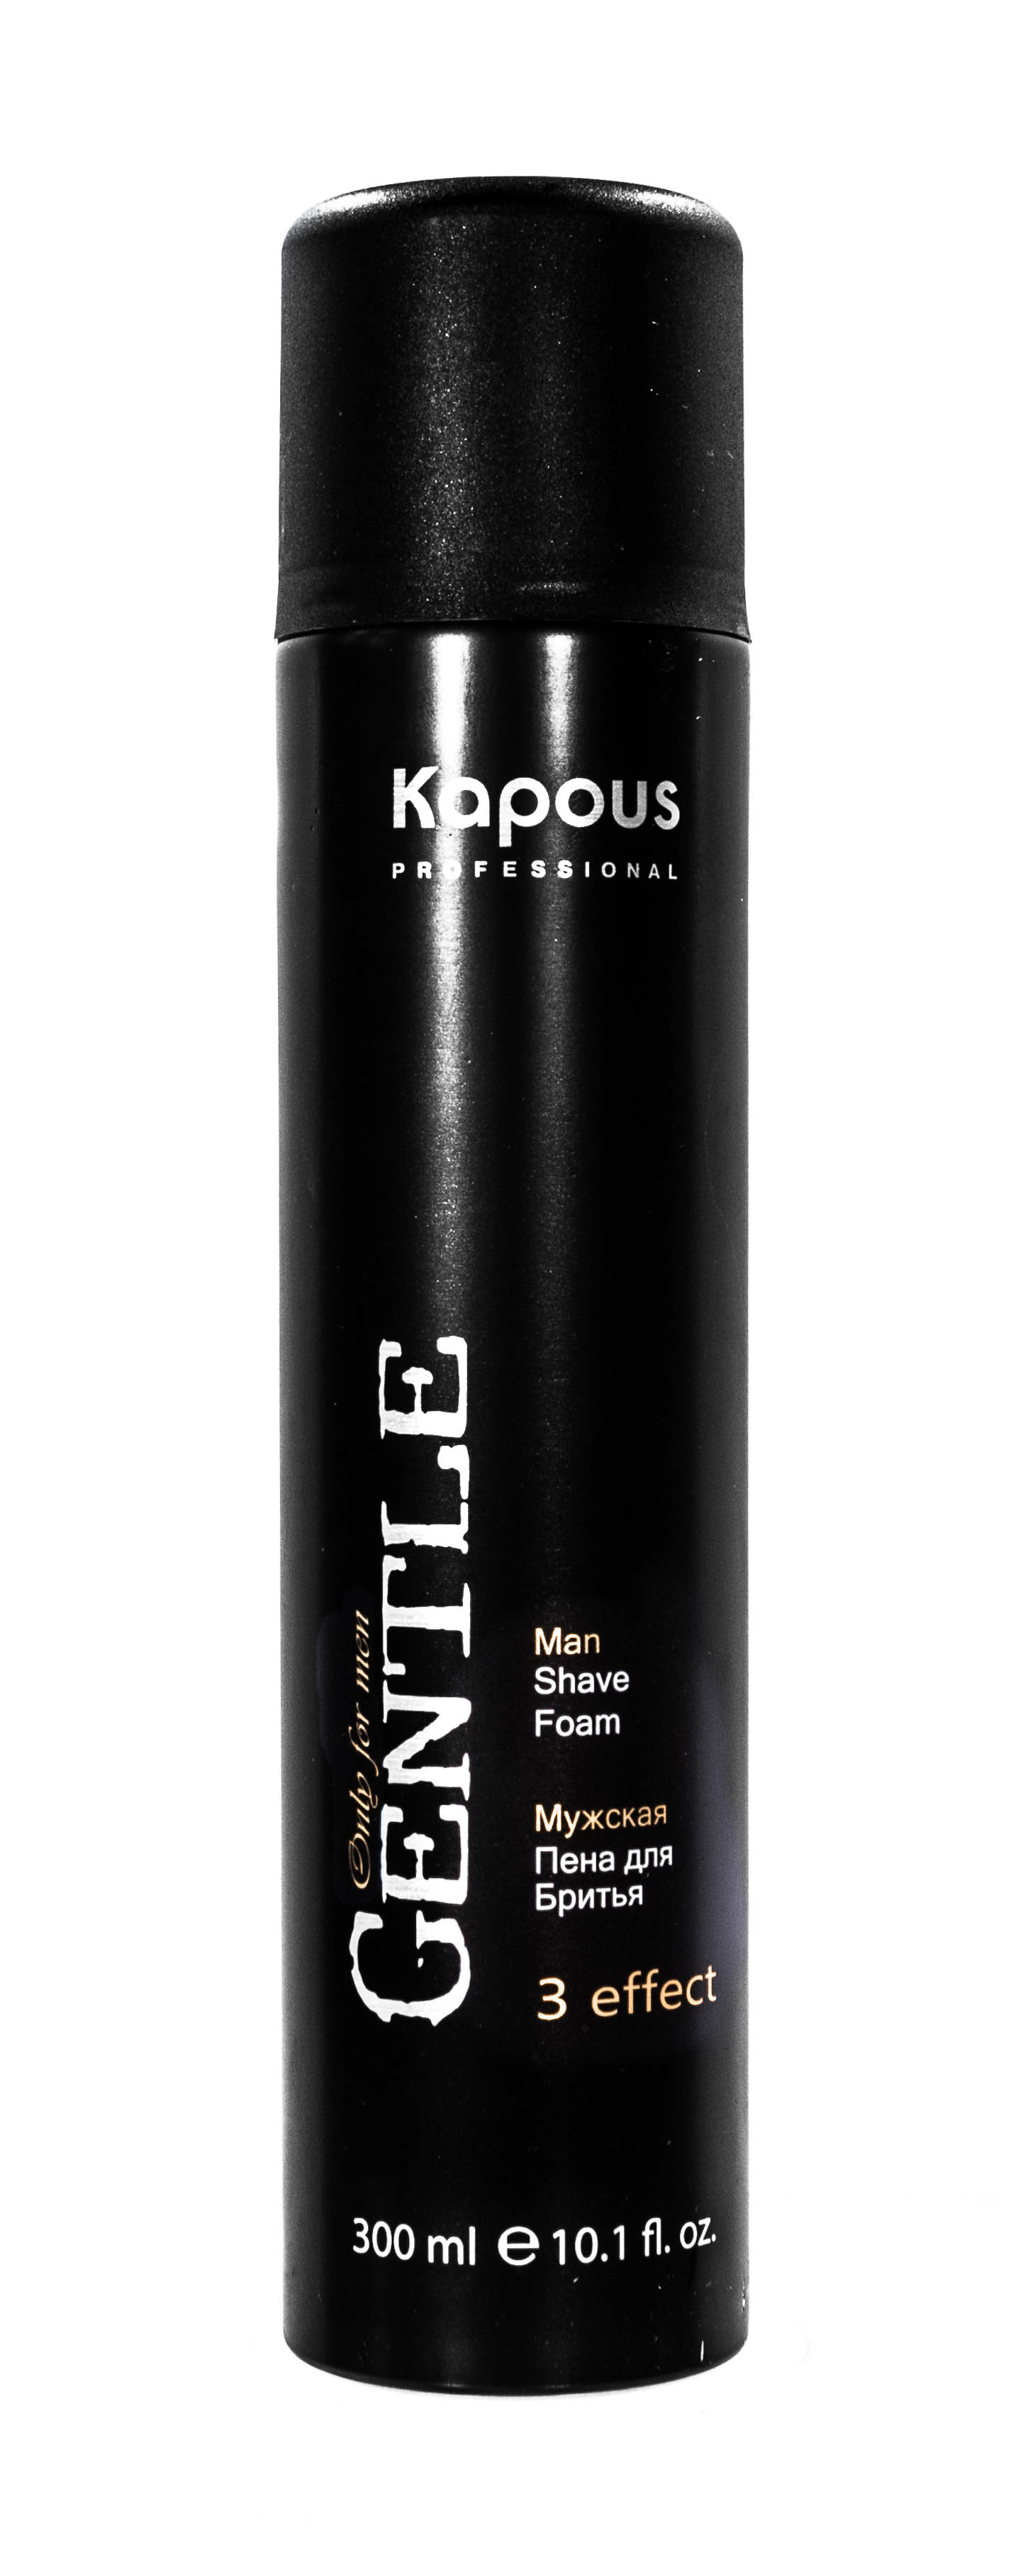 Kapous Professional Пена для бритья 3 effect, 300 мл (Kapous